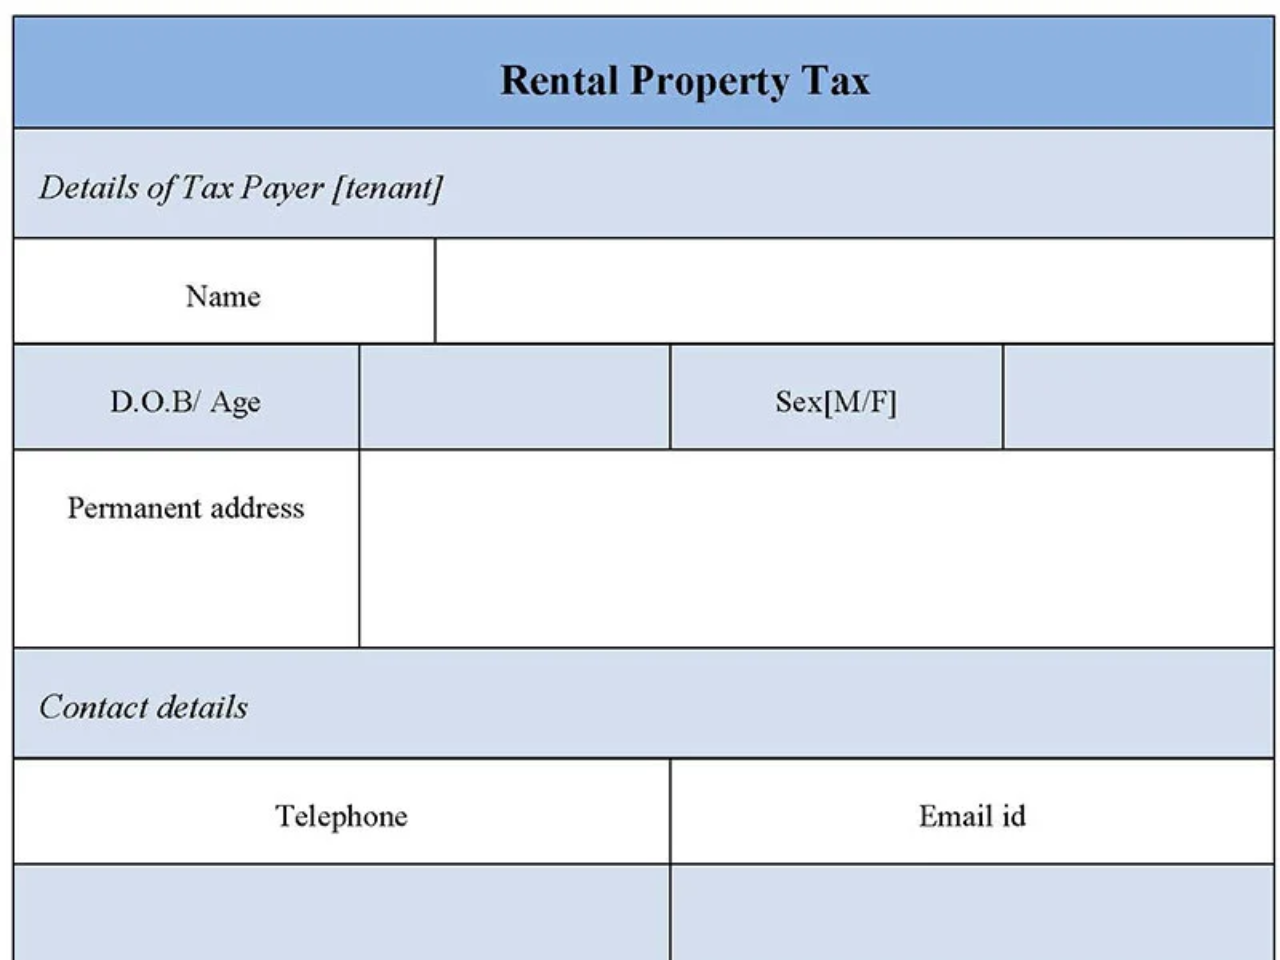 Rental Property Tax Form